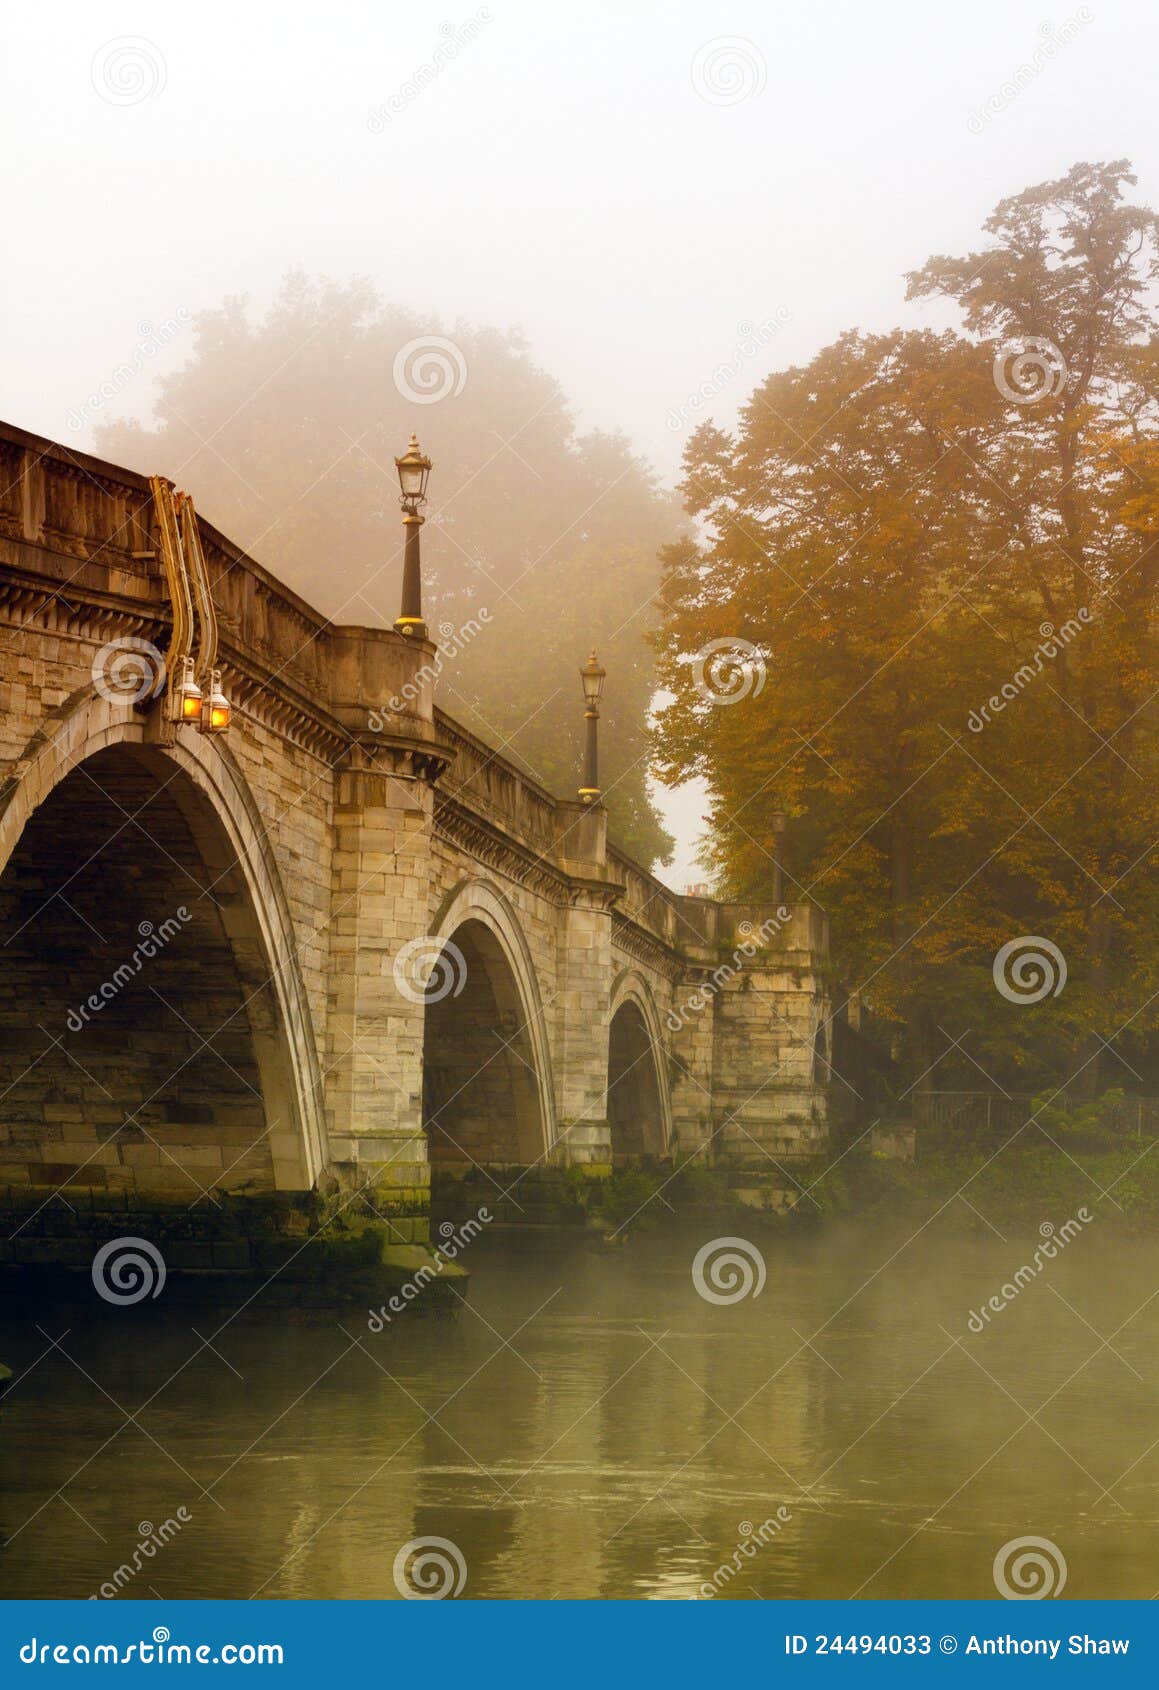 richmond bridge in autumn